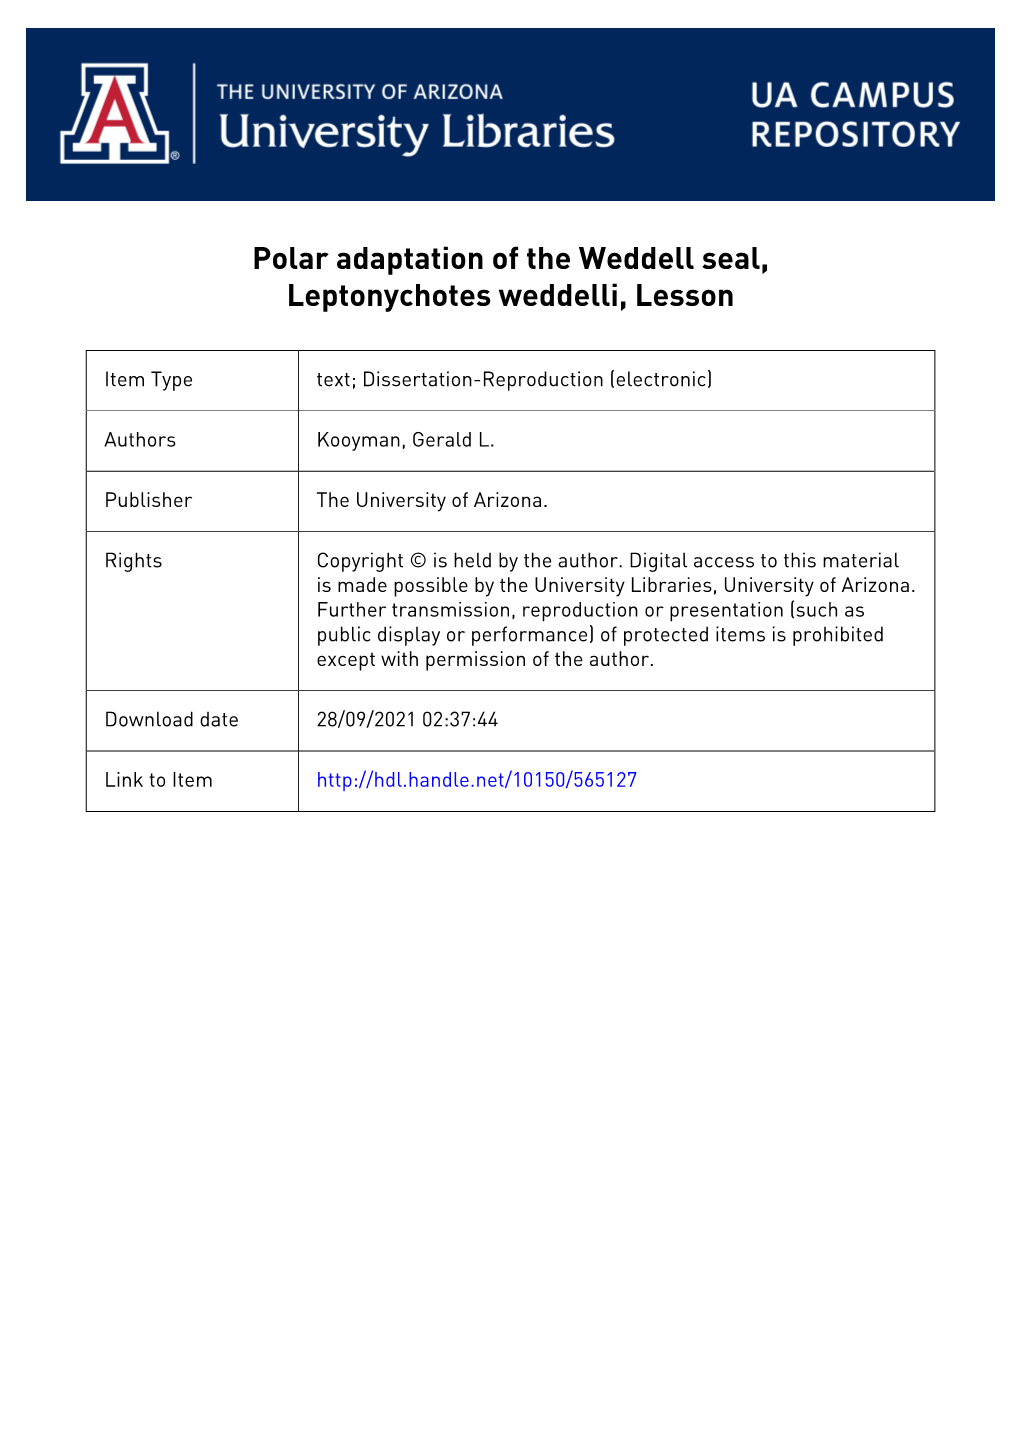 Polar Adaptation of the Weddell Seal, Leptonychotes Weddelli, Lesson